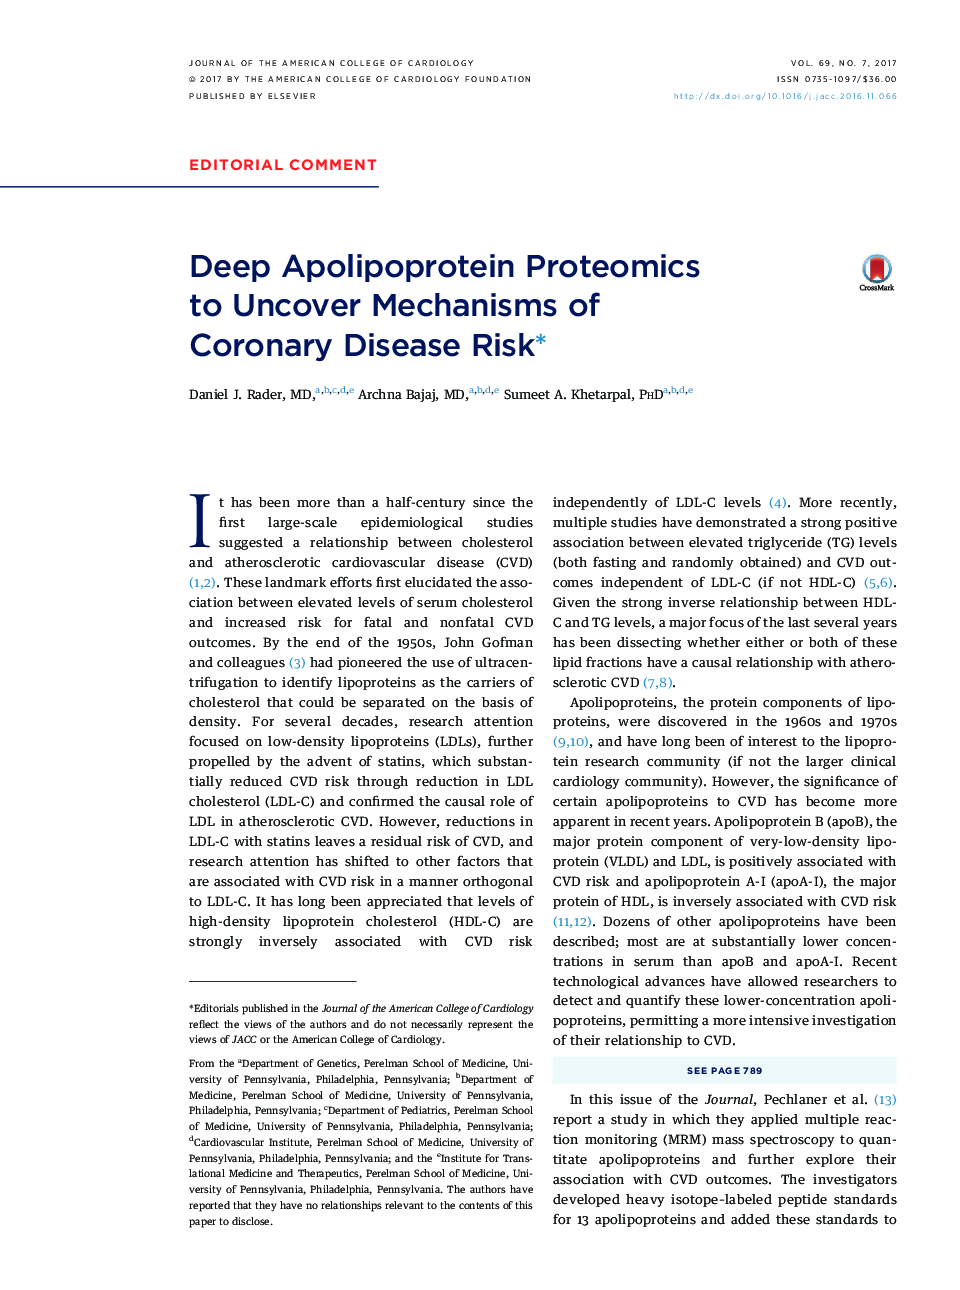 Deep Apolipoprotein Proteomics toÂ Uncover Mechanisms of CoronaryÂ DiseaseÂ Riskâ